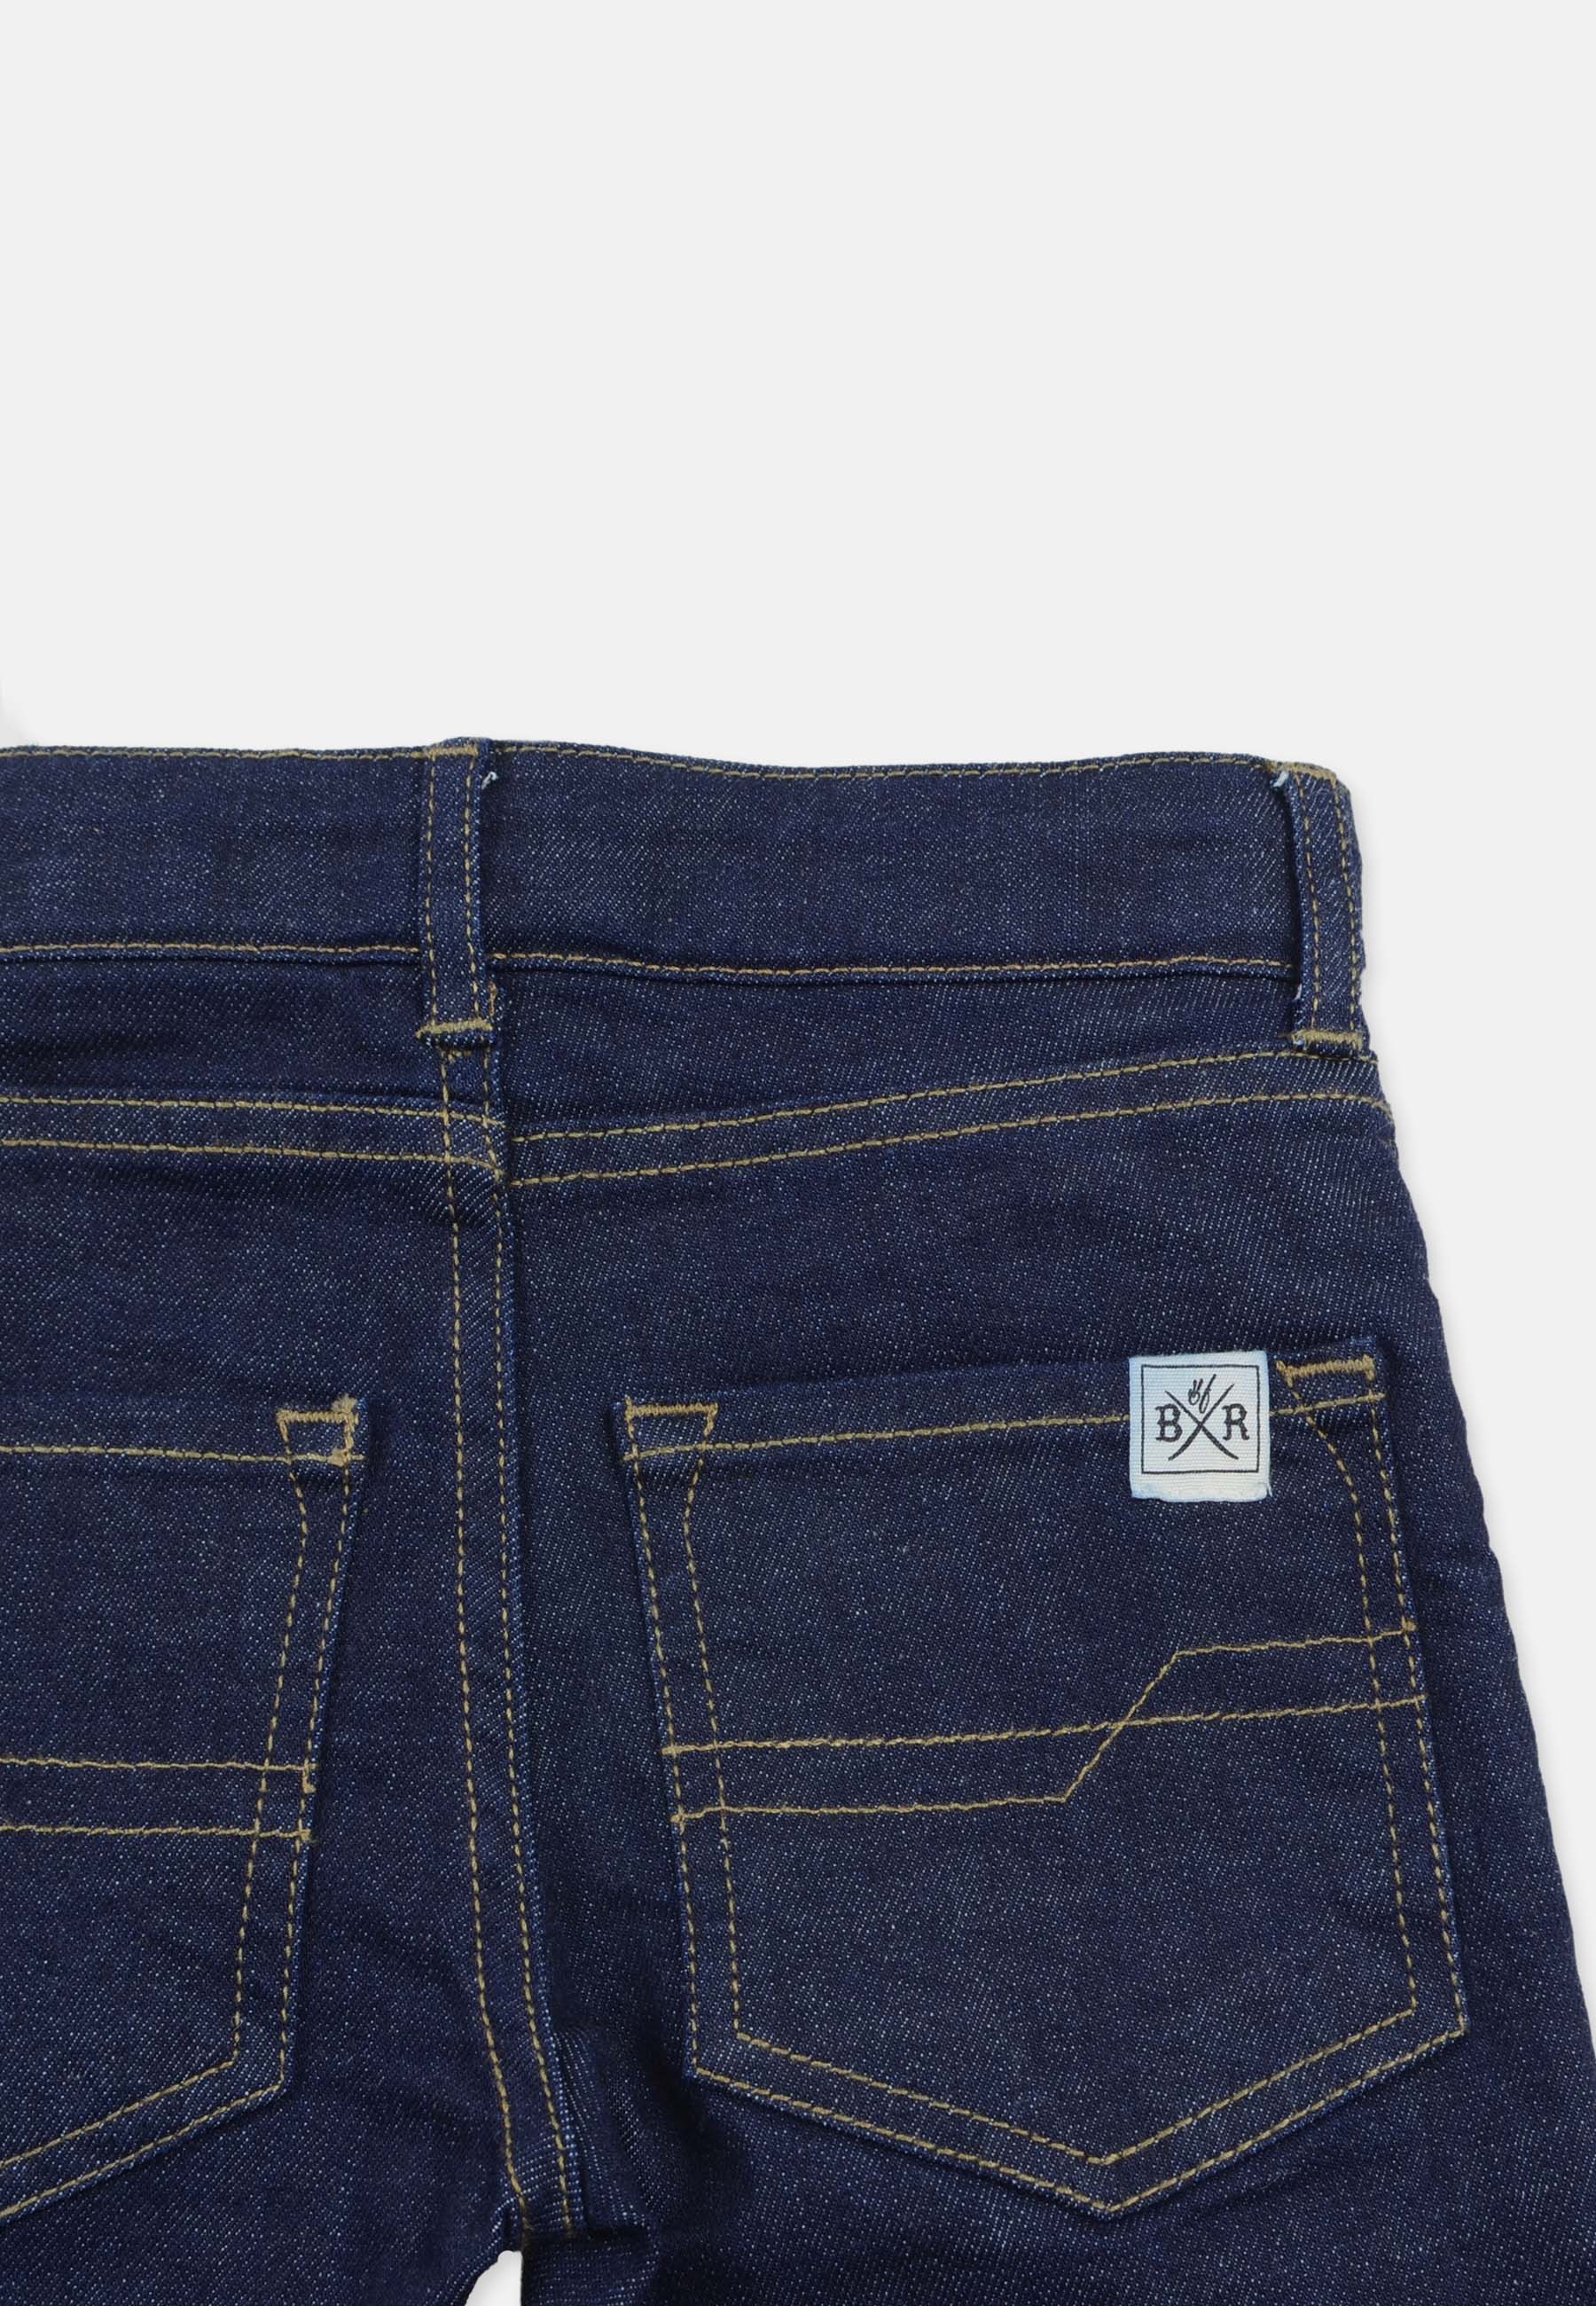 5 Pocket Jeans Shorts